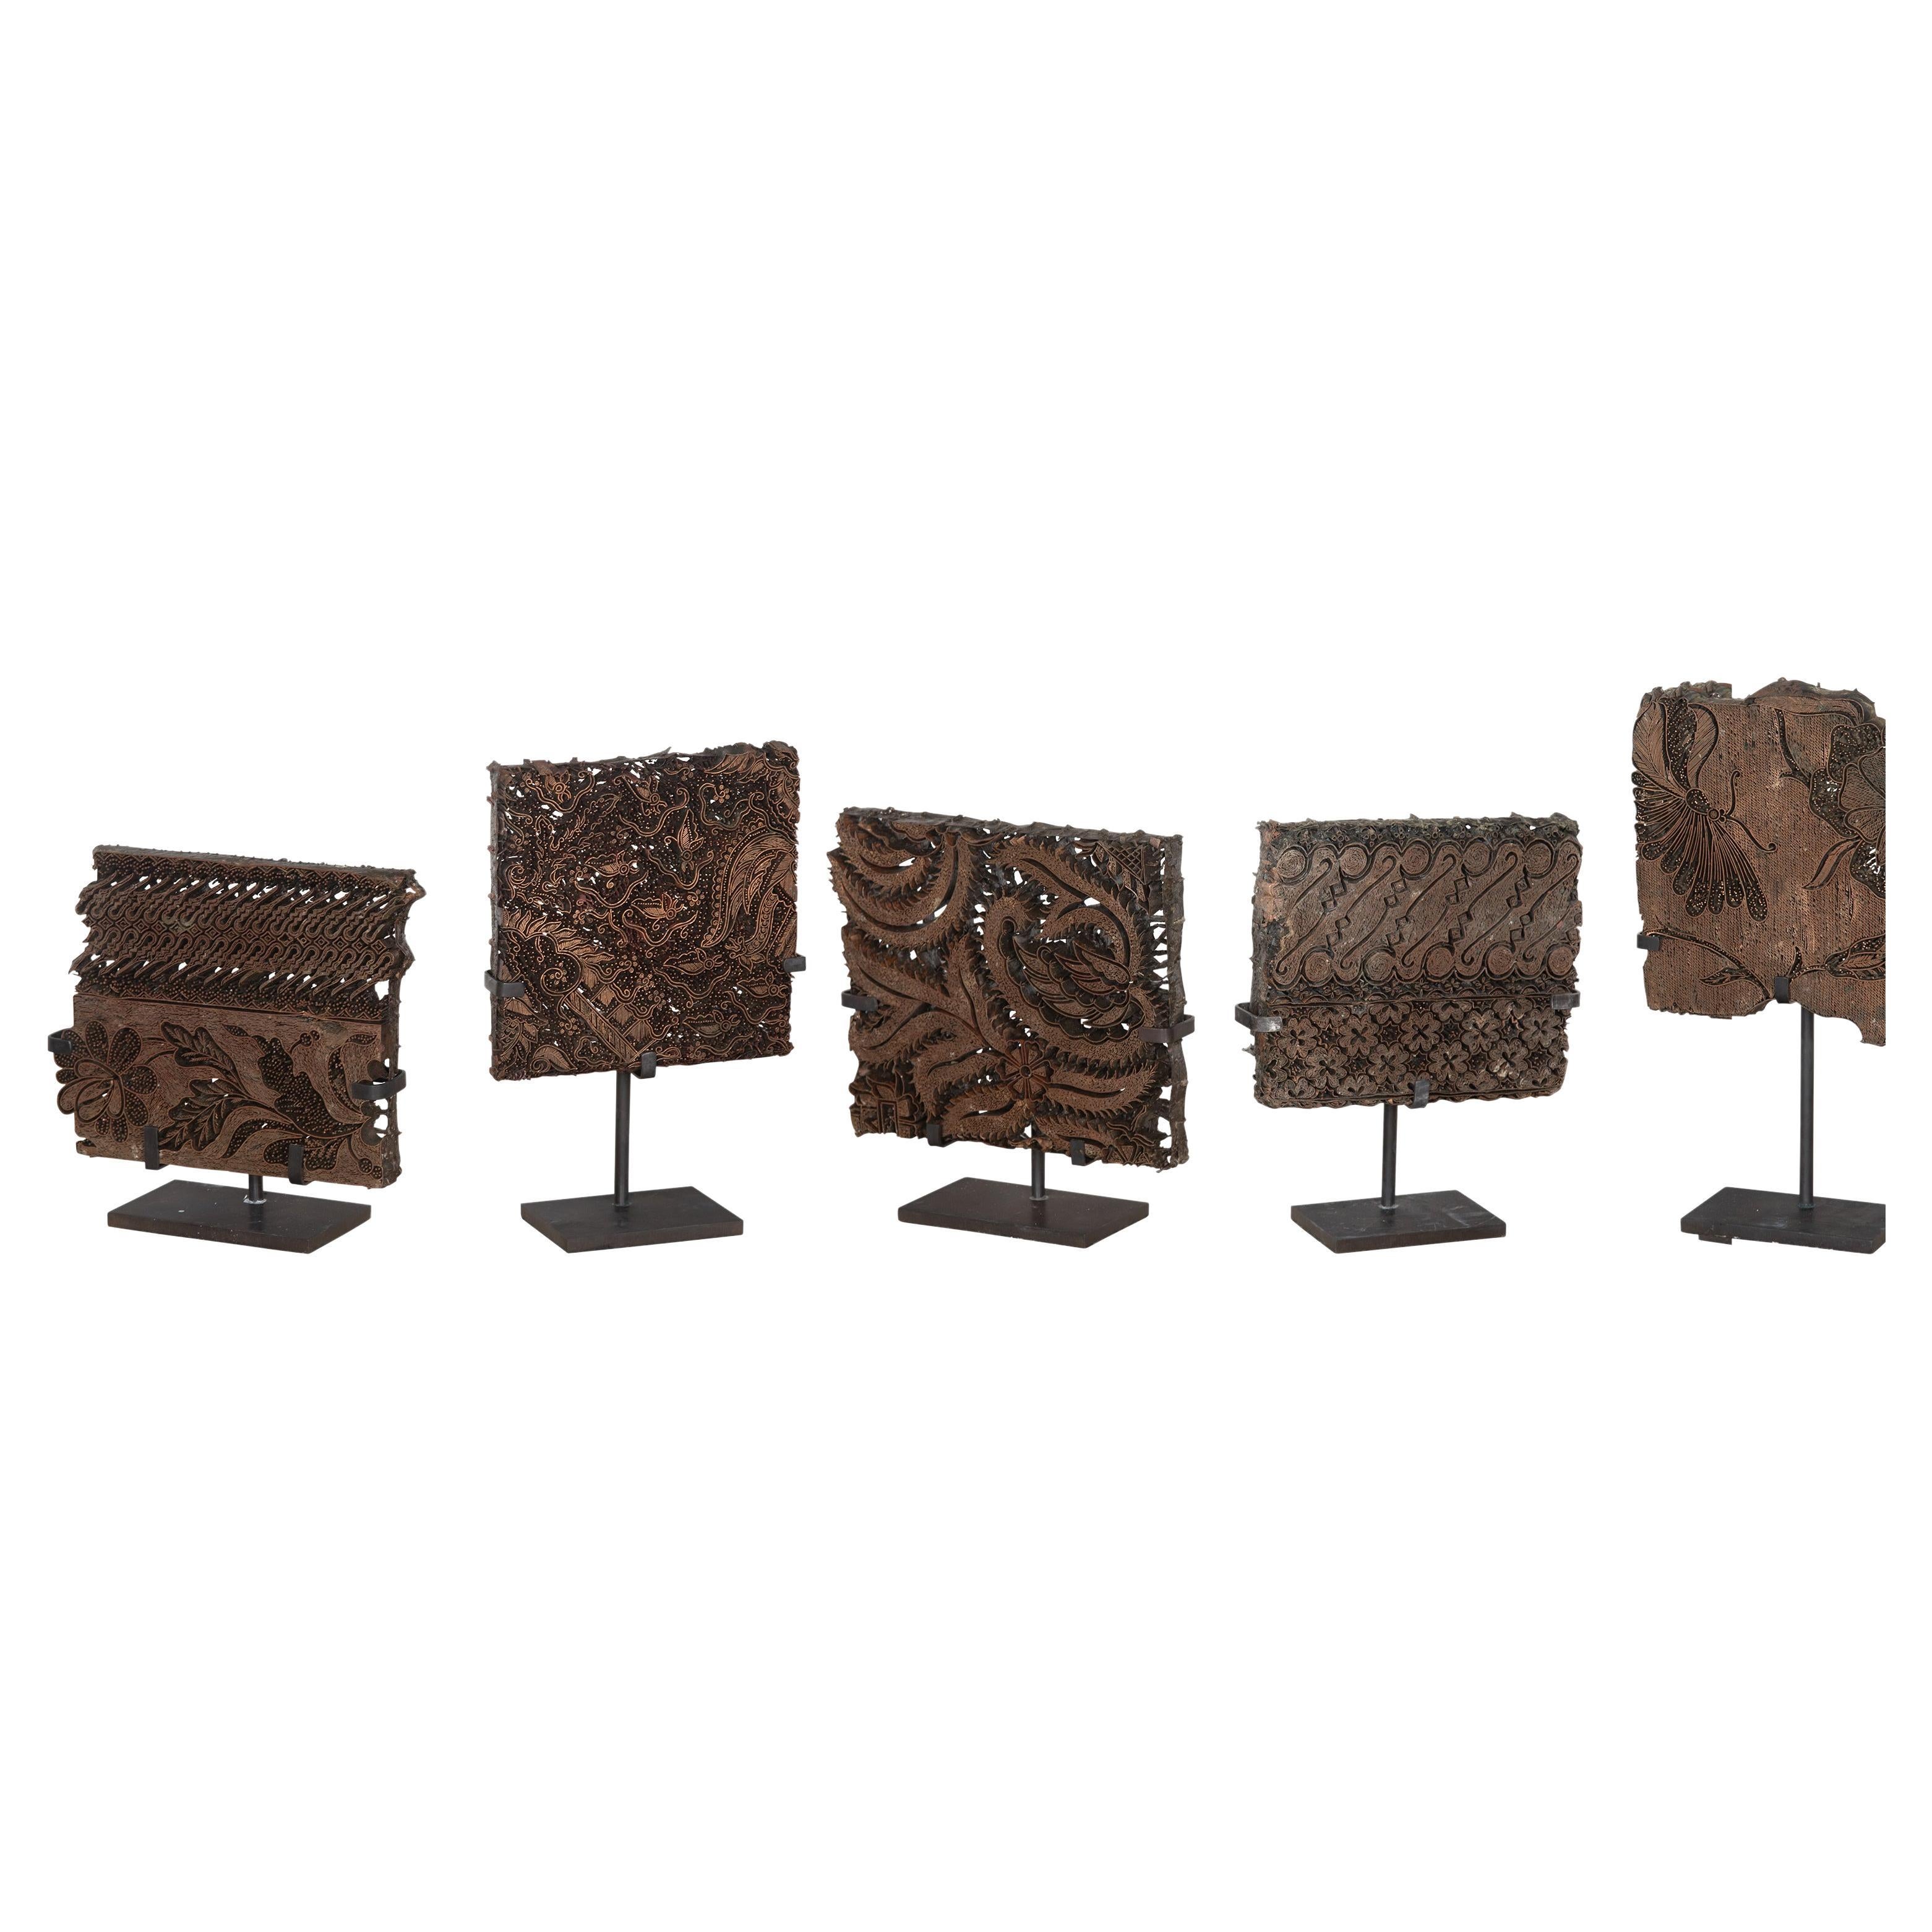 Collection of Five 19th Century Batik Printing Blocks